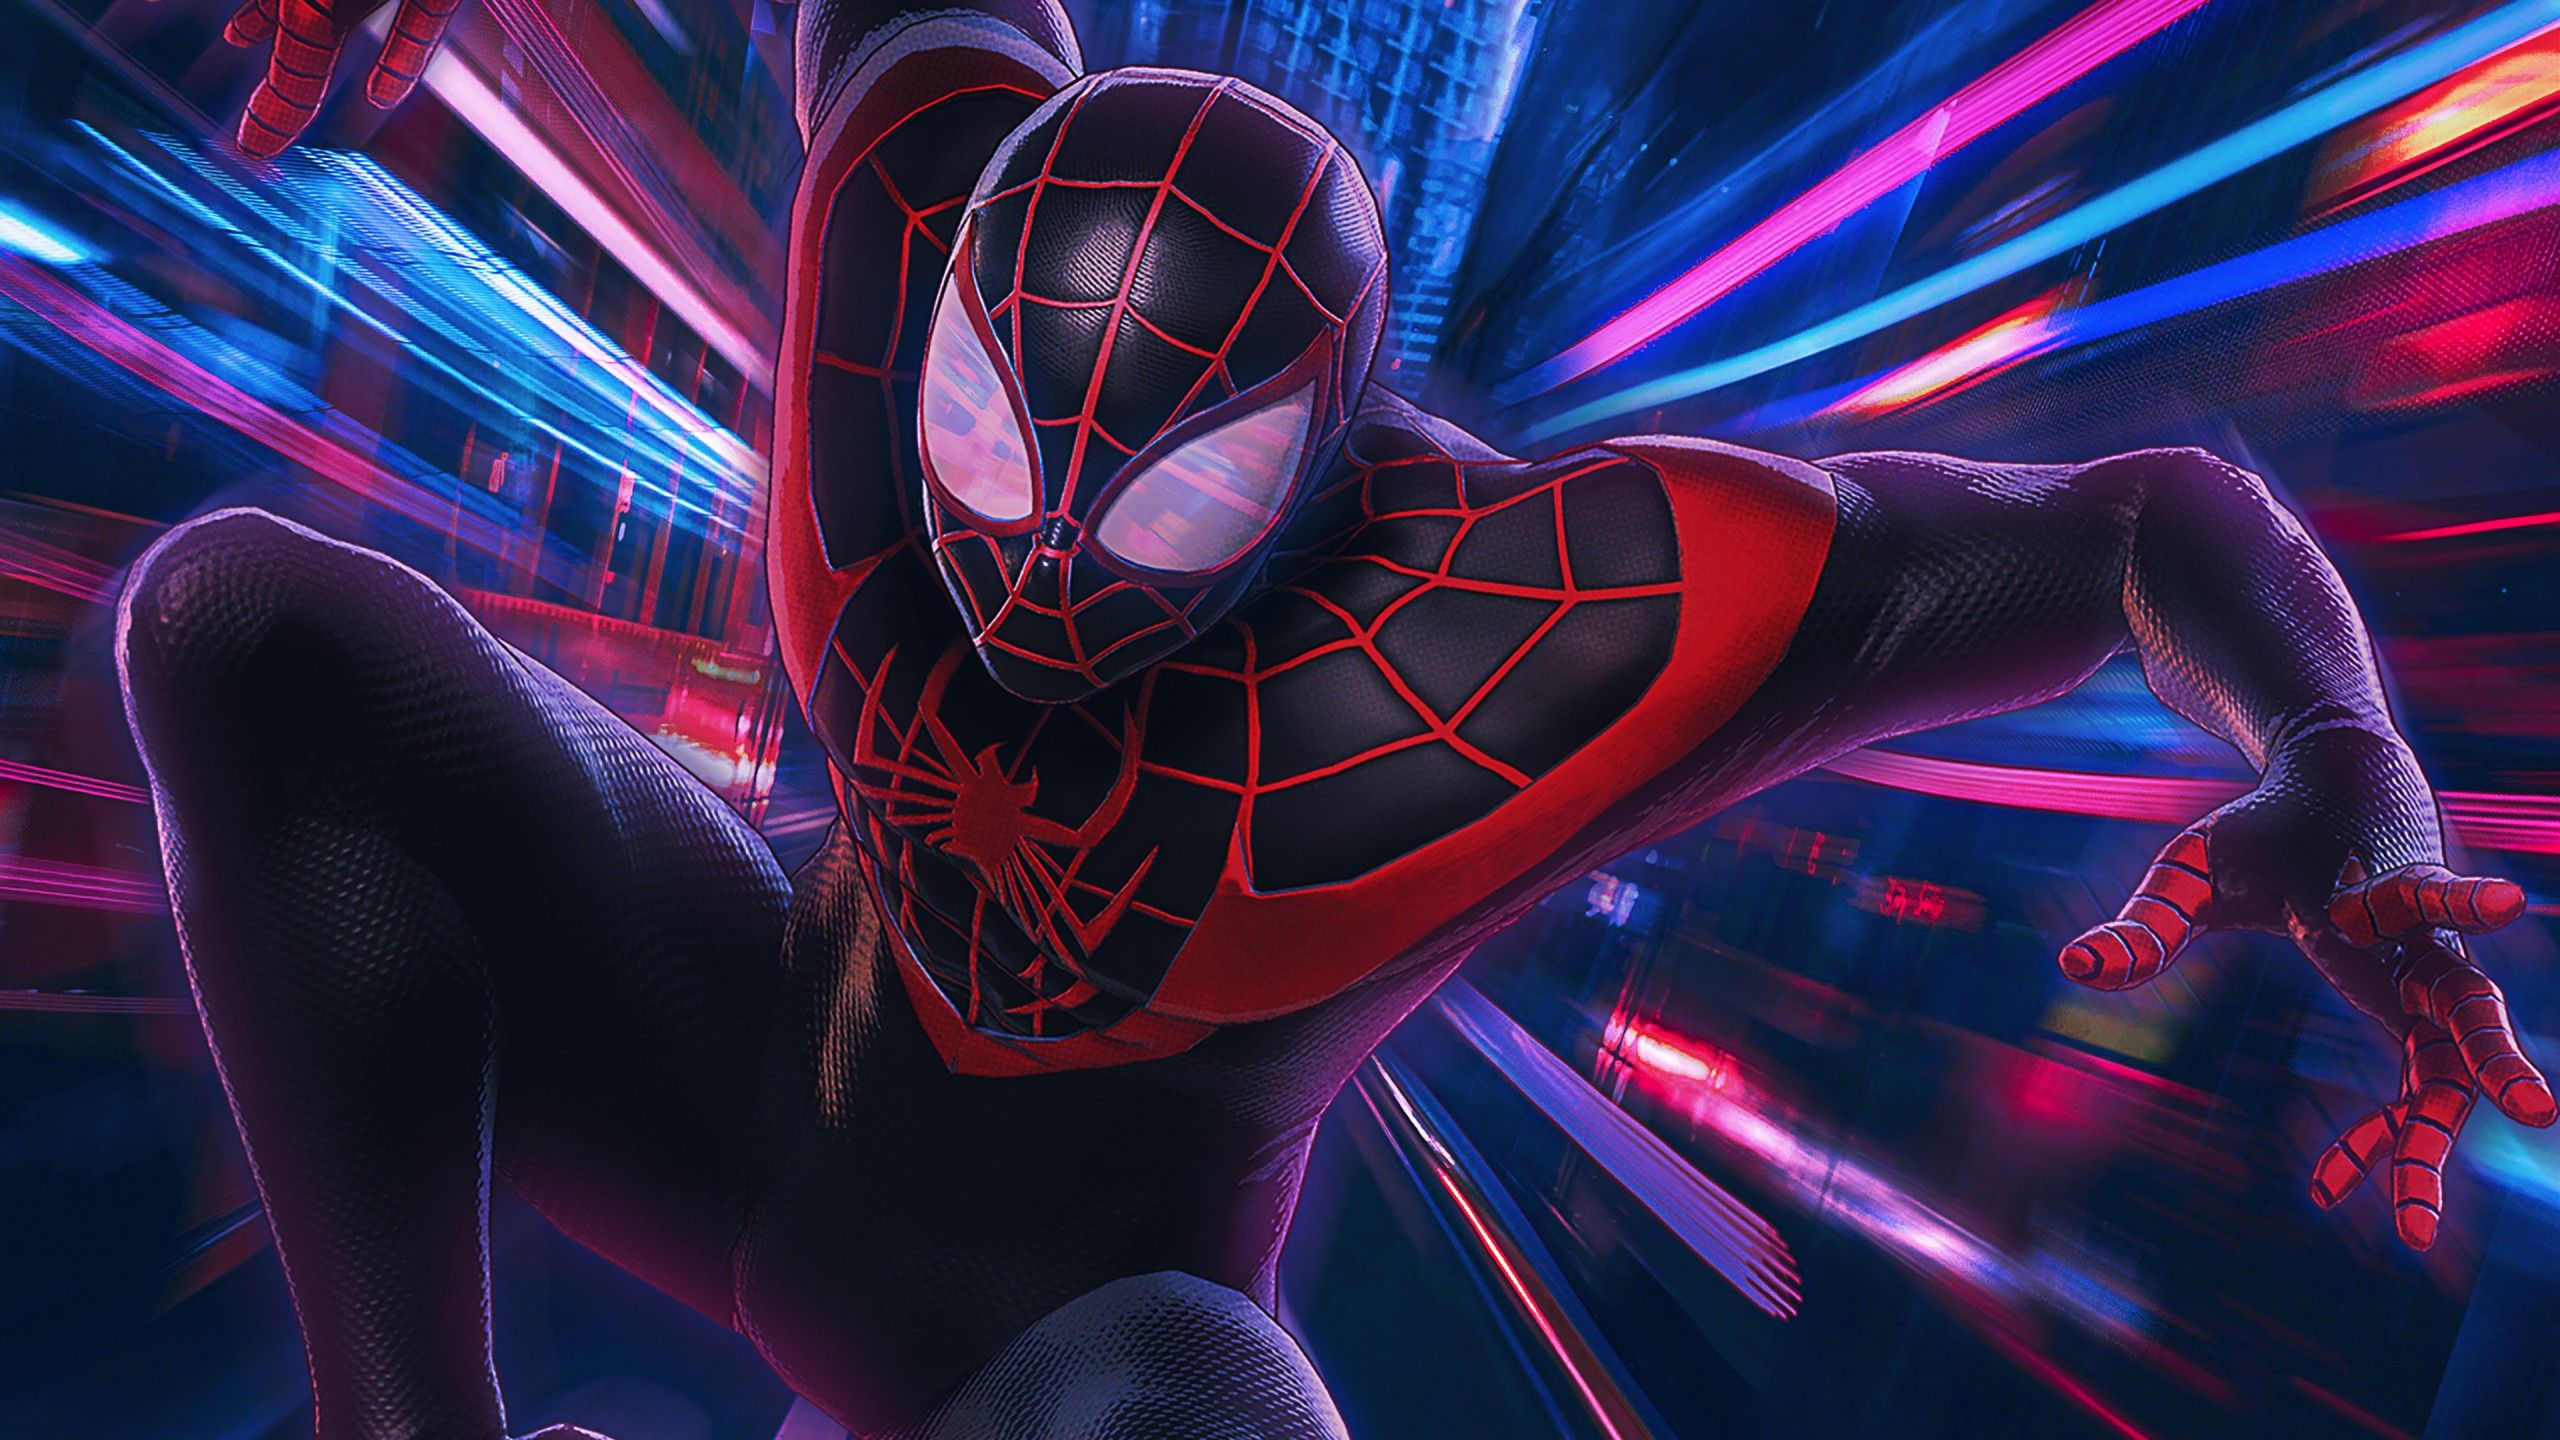 Spider Man 4K Wallpaper, Miles Morales,, Into The Spider Verse, Marvel Superheroes, Graphics CGI